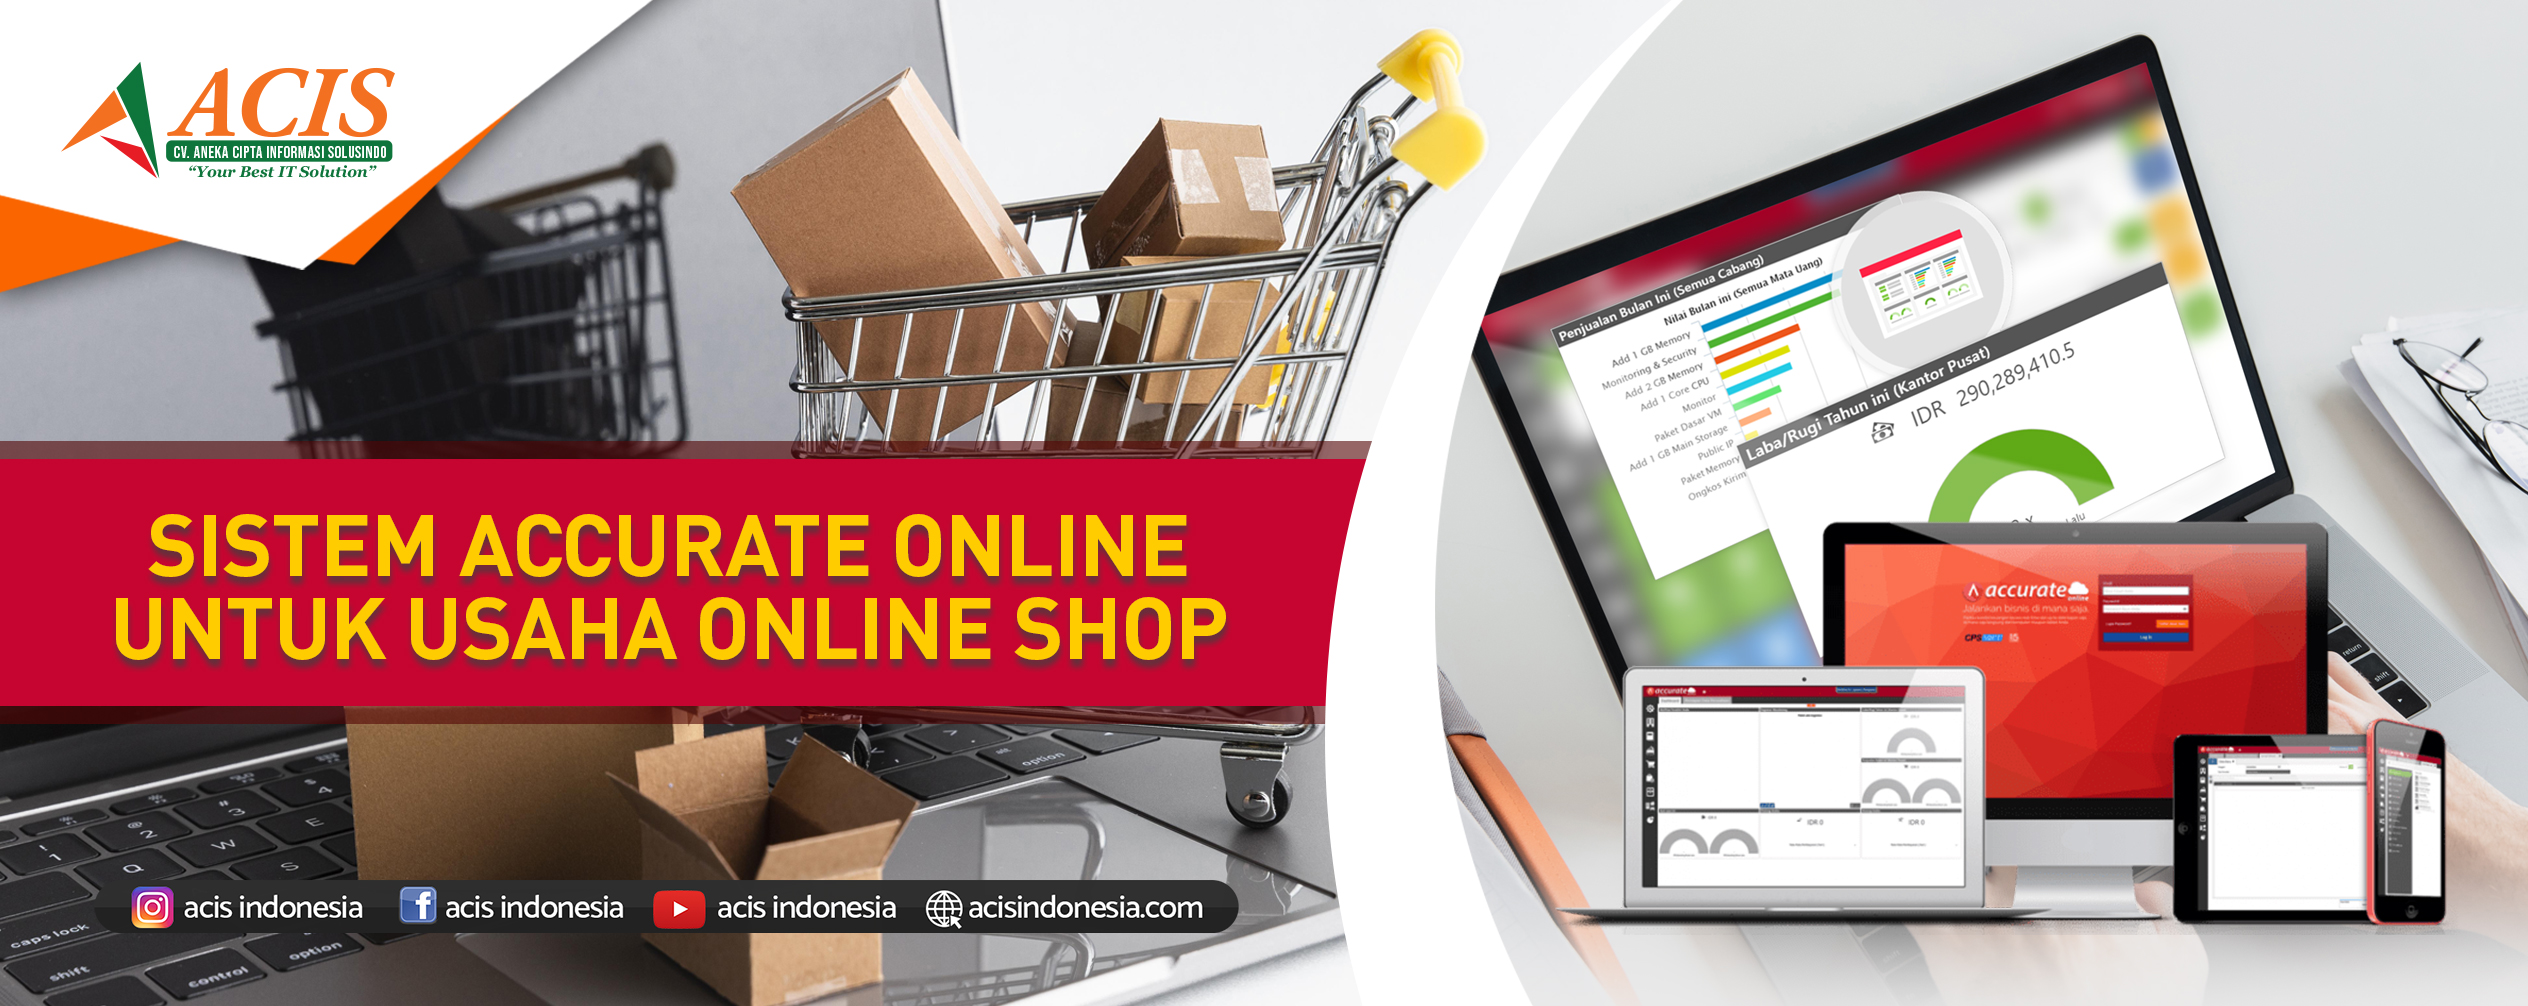 Accurate online untuk usaha online shop